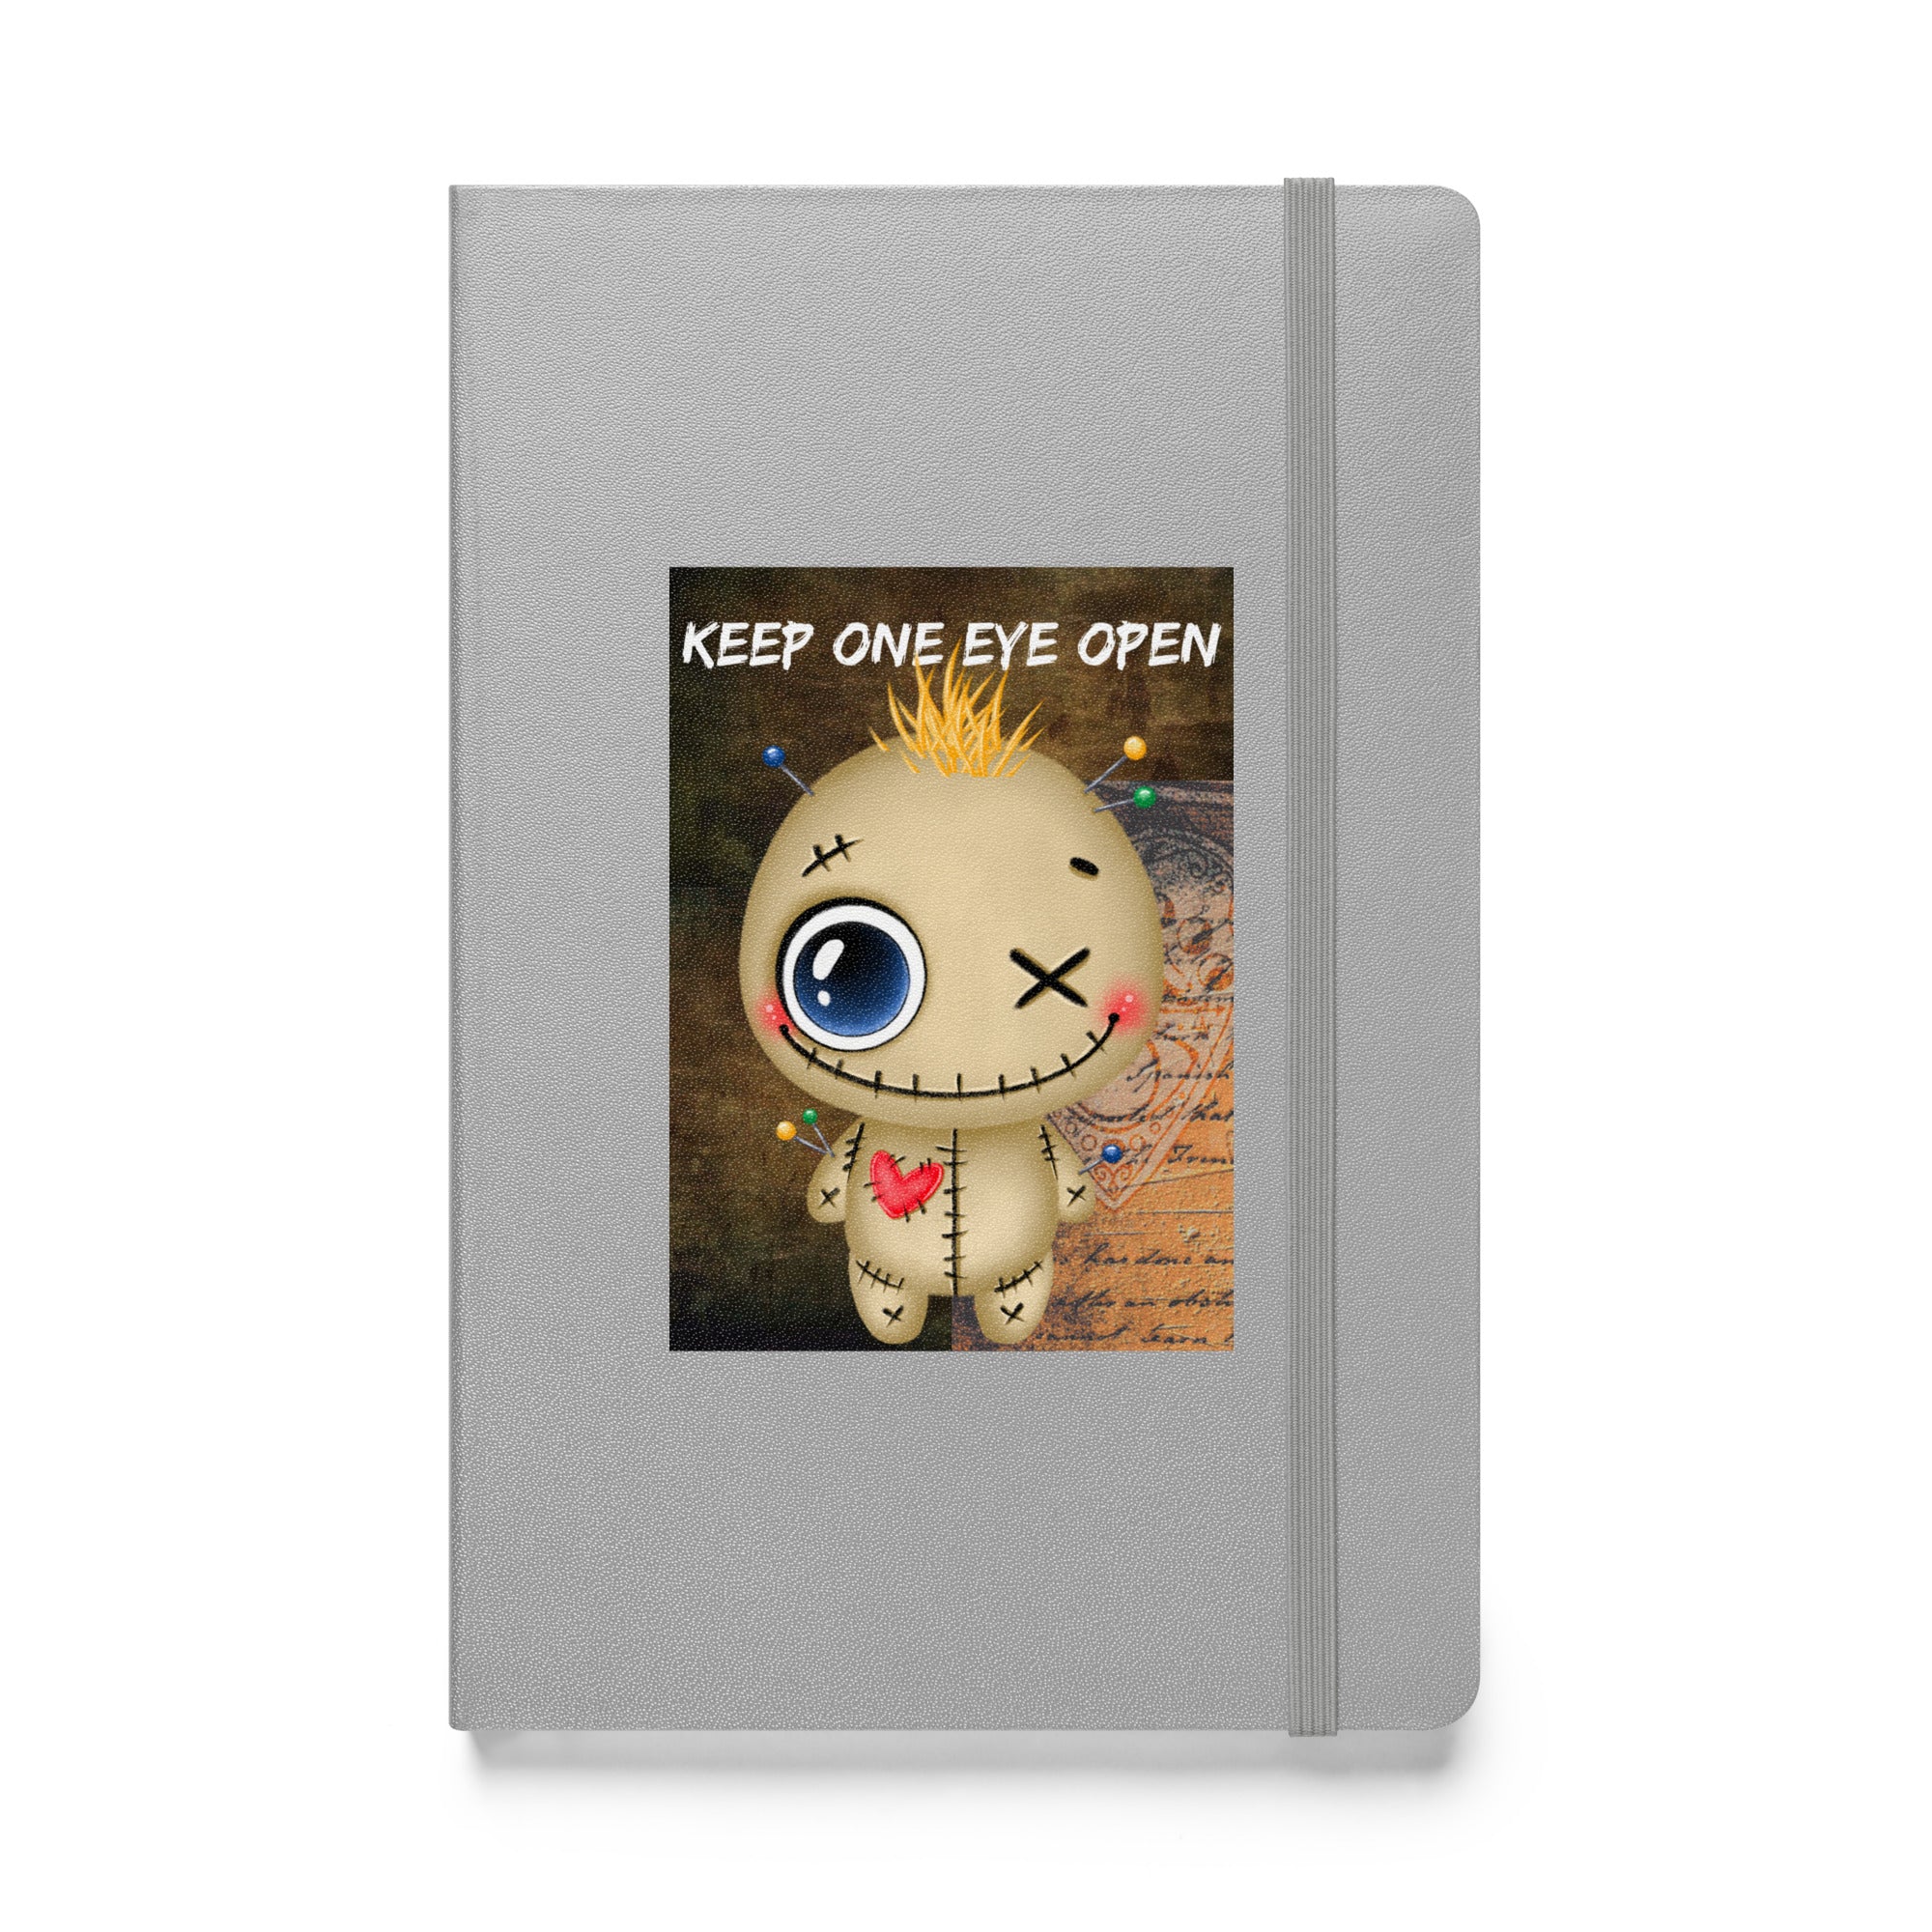 Keep One Eye Open Voodoo Doll Hardcover bound notebook